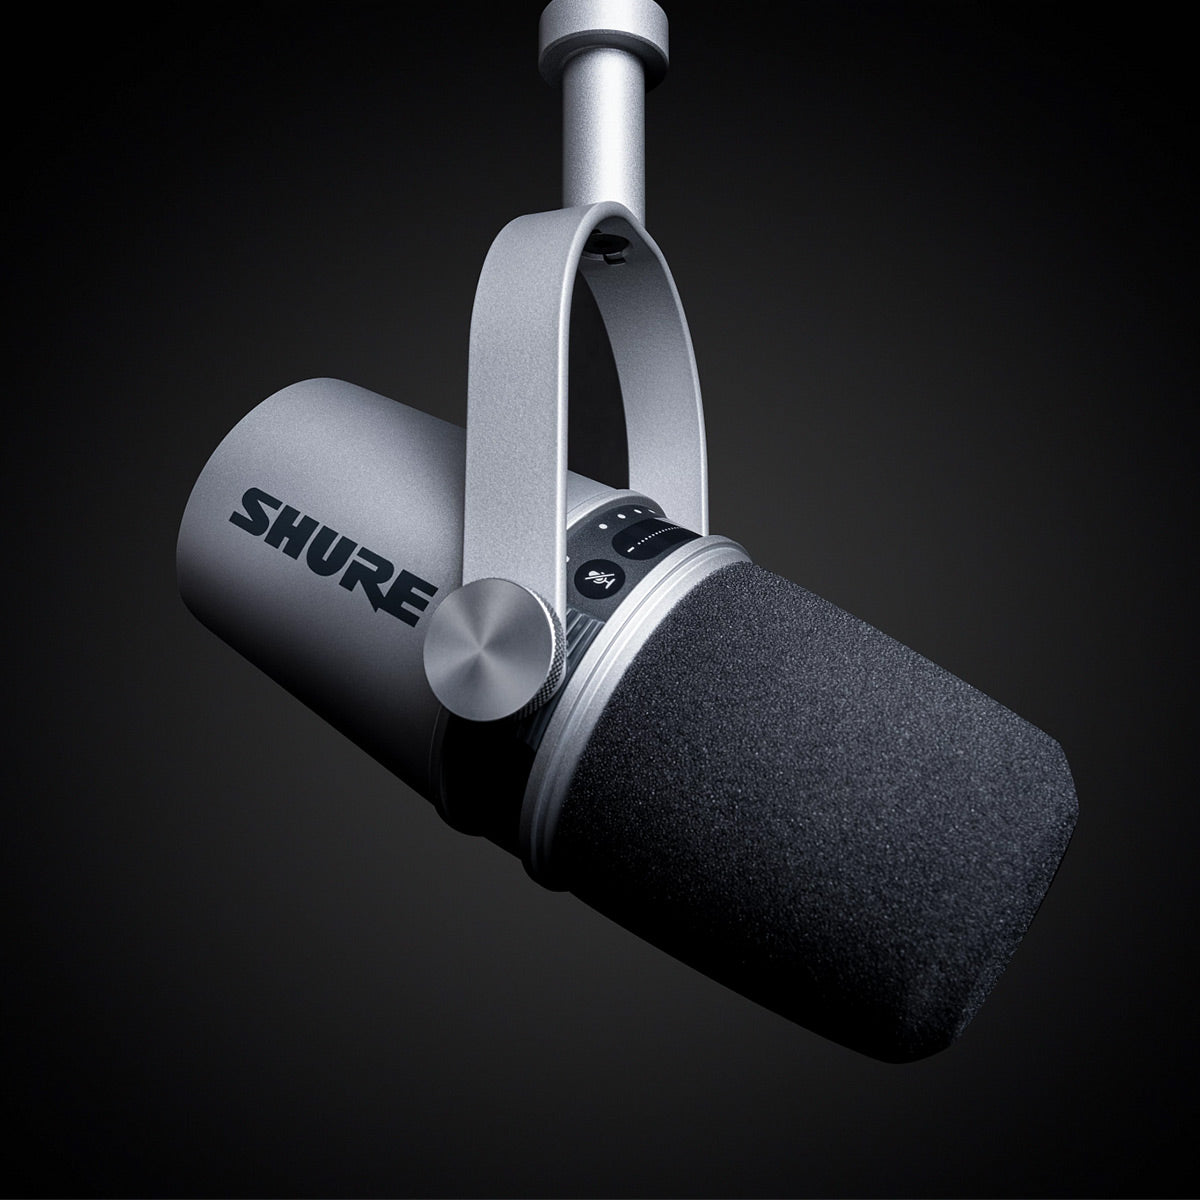 Shure MV7 USB/XLR Dynamic Microphone for Podcasting, Recording